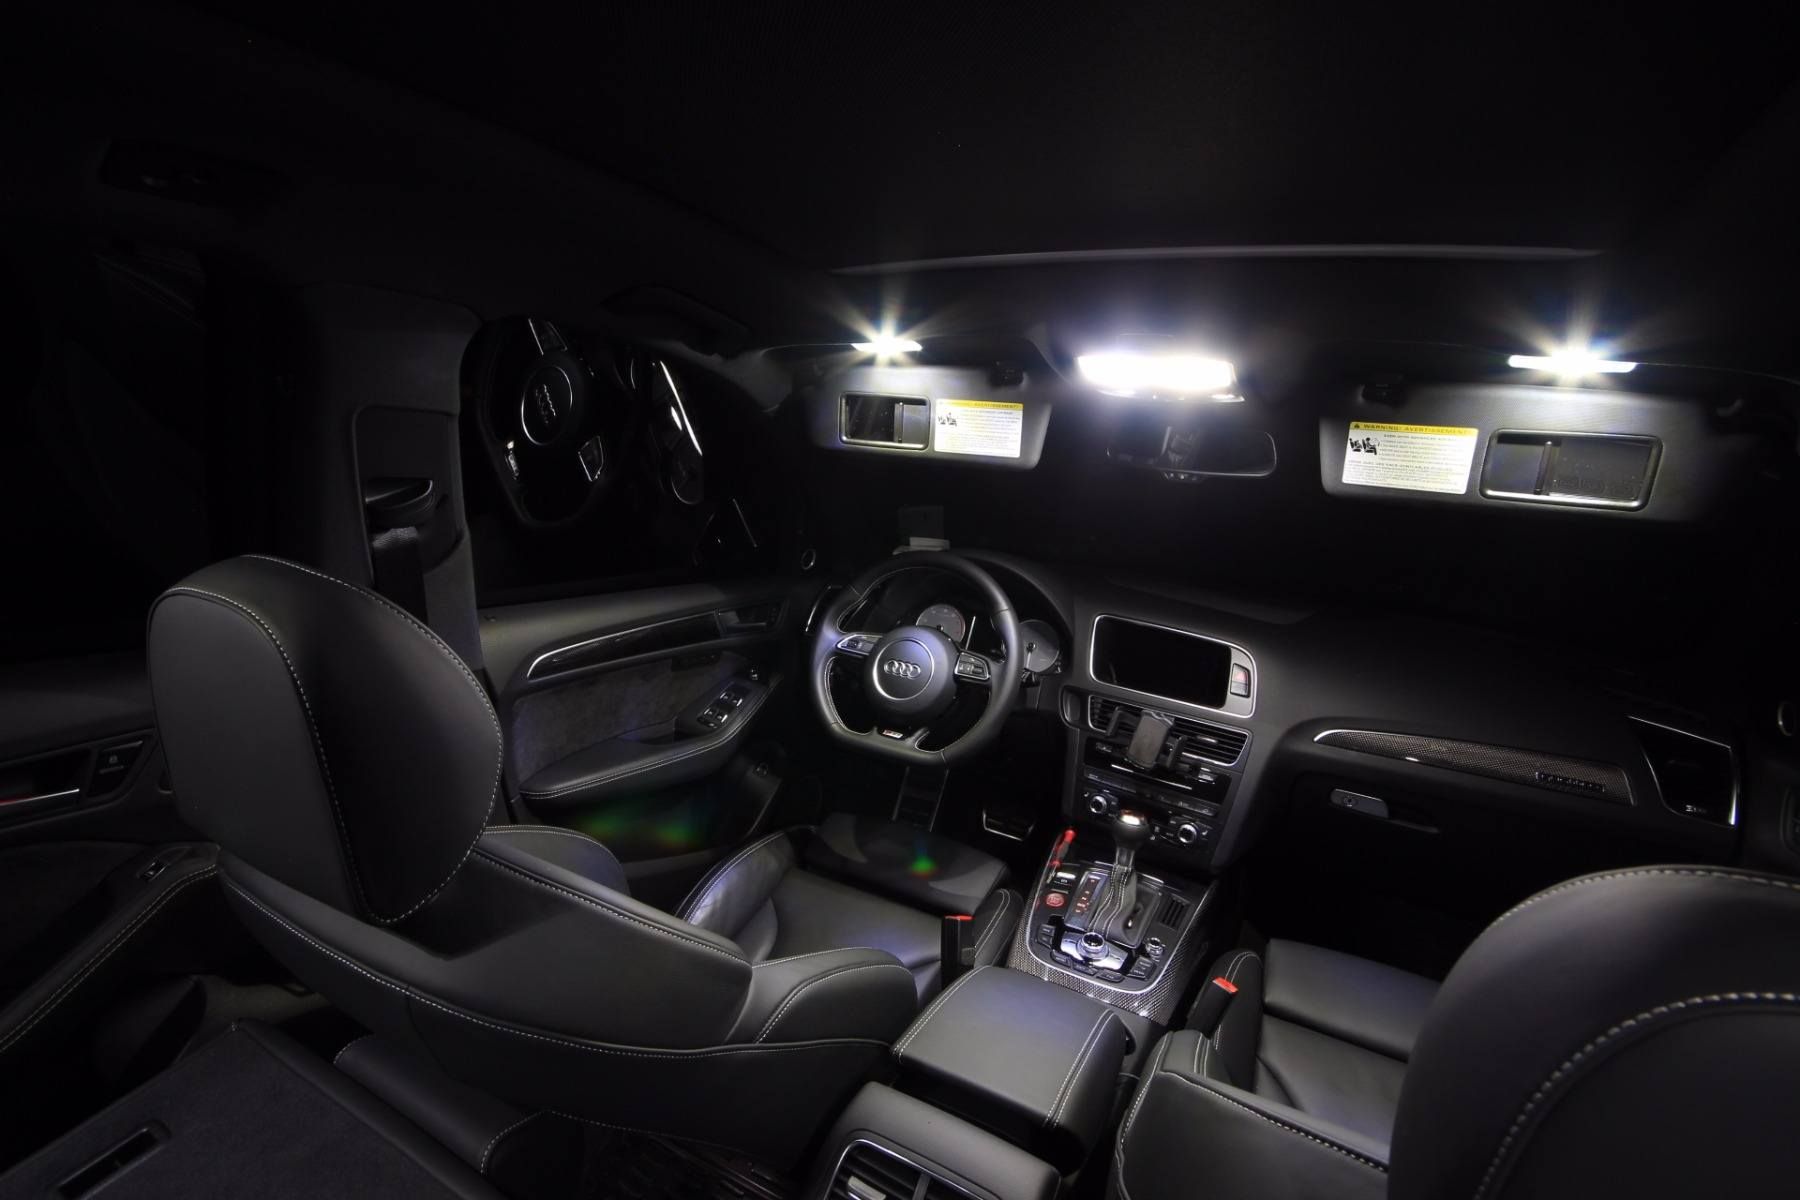 https://hidkitpros.com/wp-content/uploads/2017/12/Audi-Q5-LED-Interior-Lighting.jpg